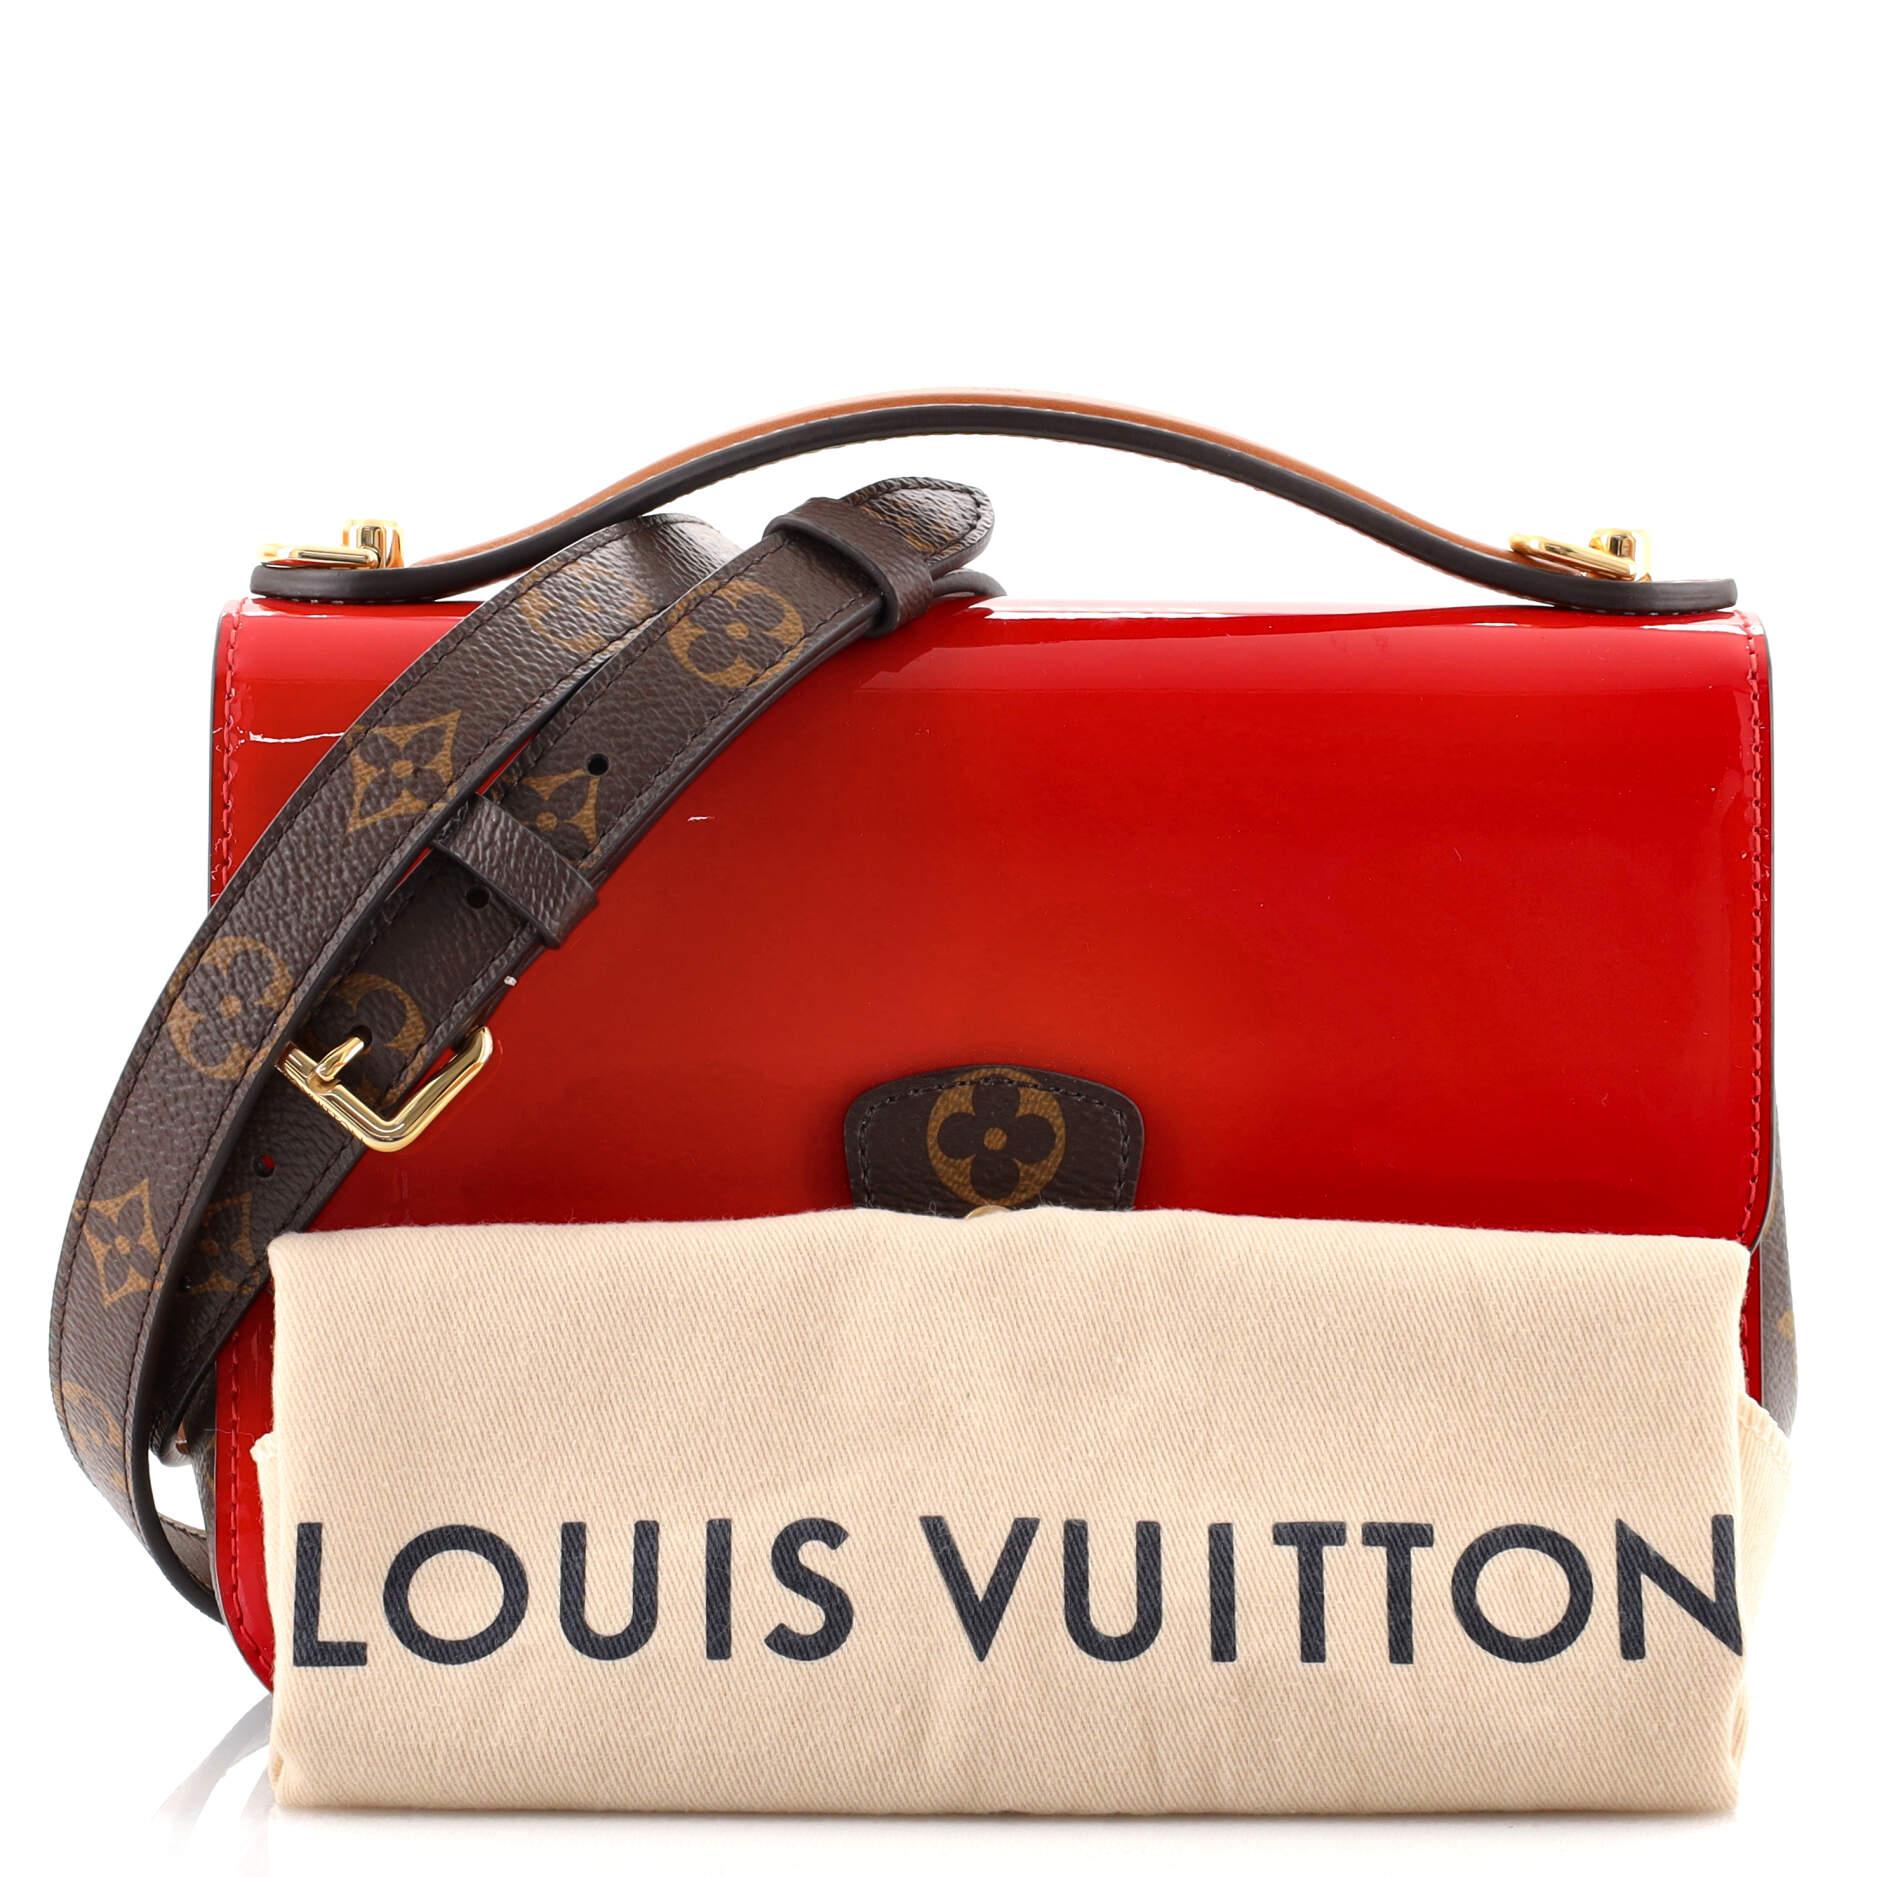 LOUIS VUITTON Cherrywood BB Patent Leather Shoulder Bag Rose Ballerine